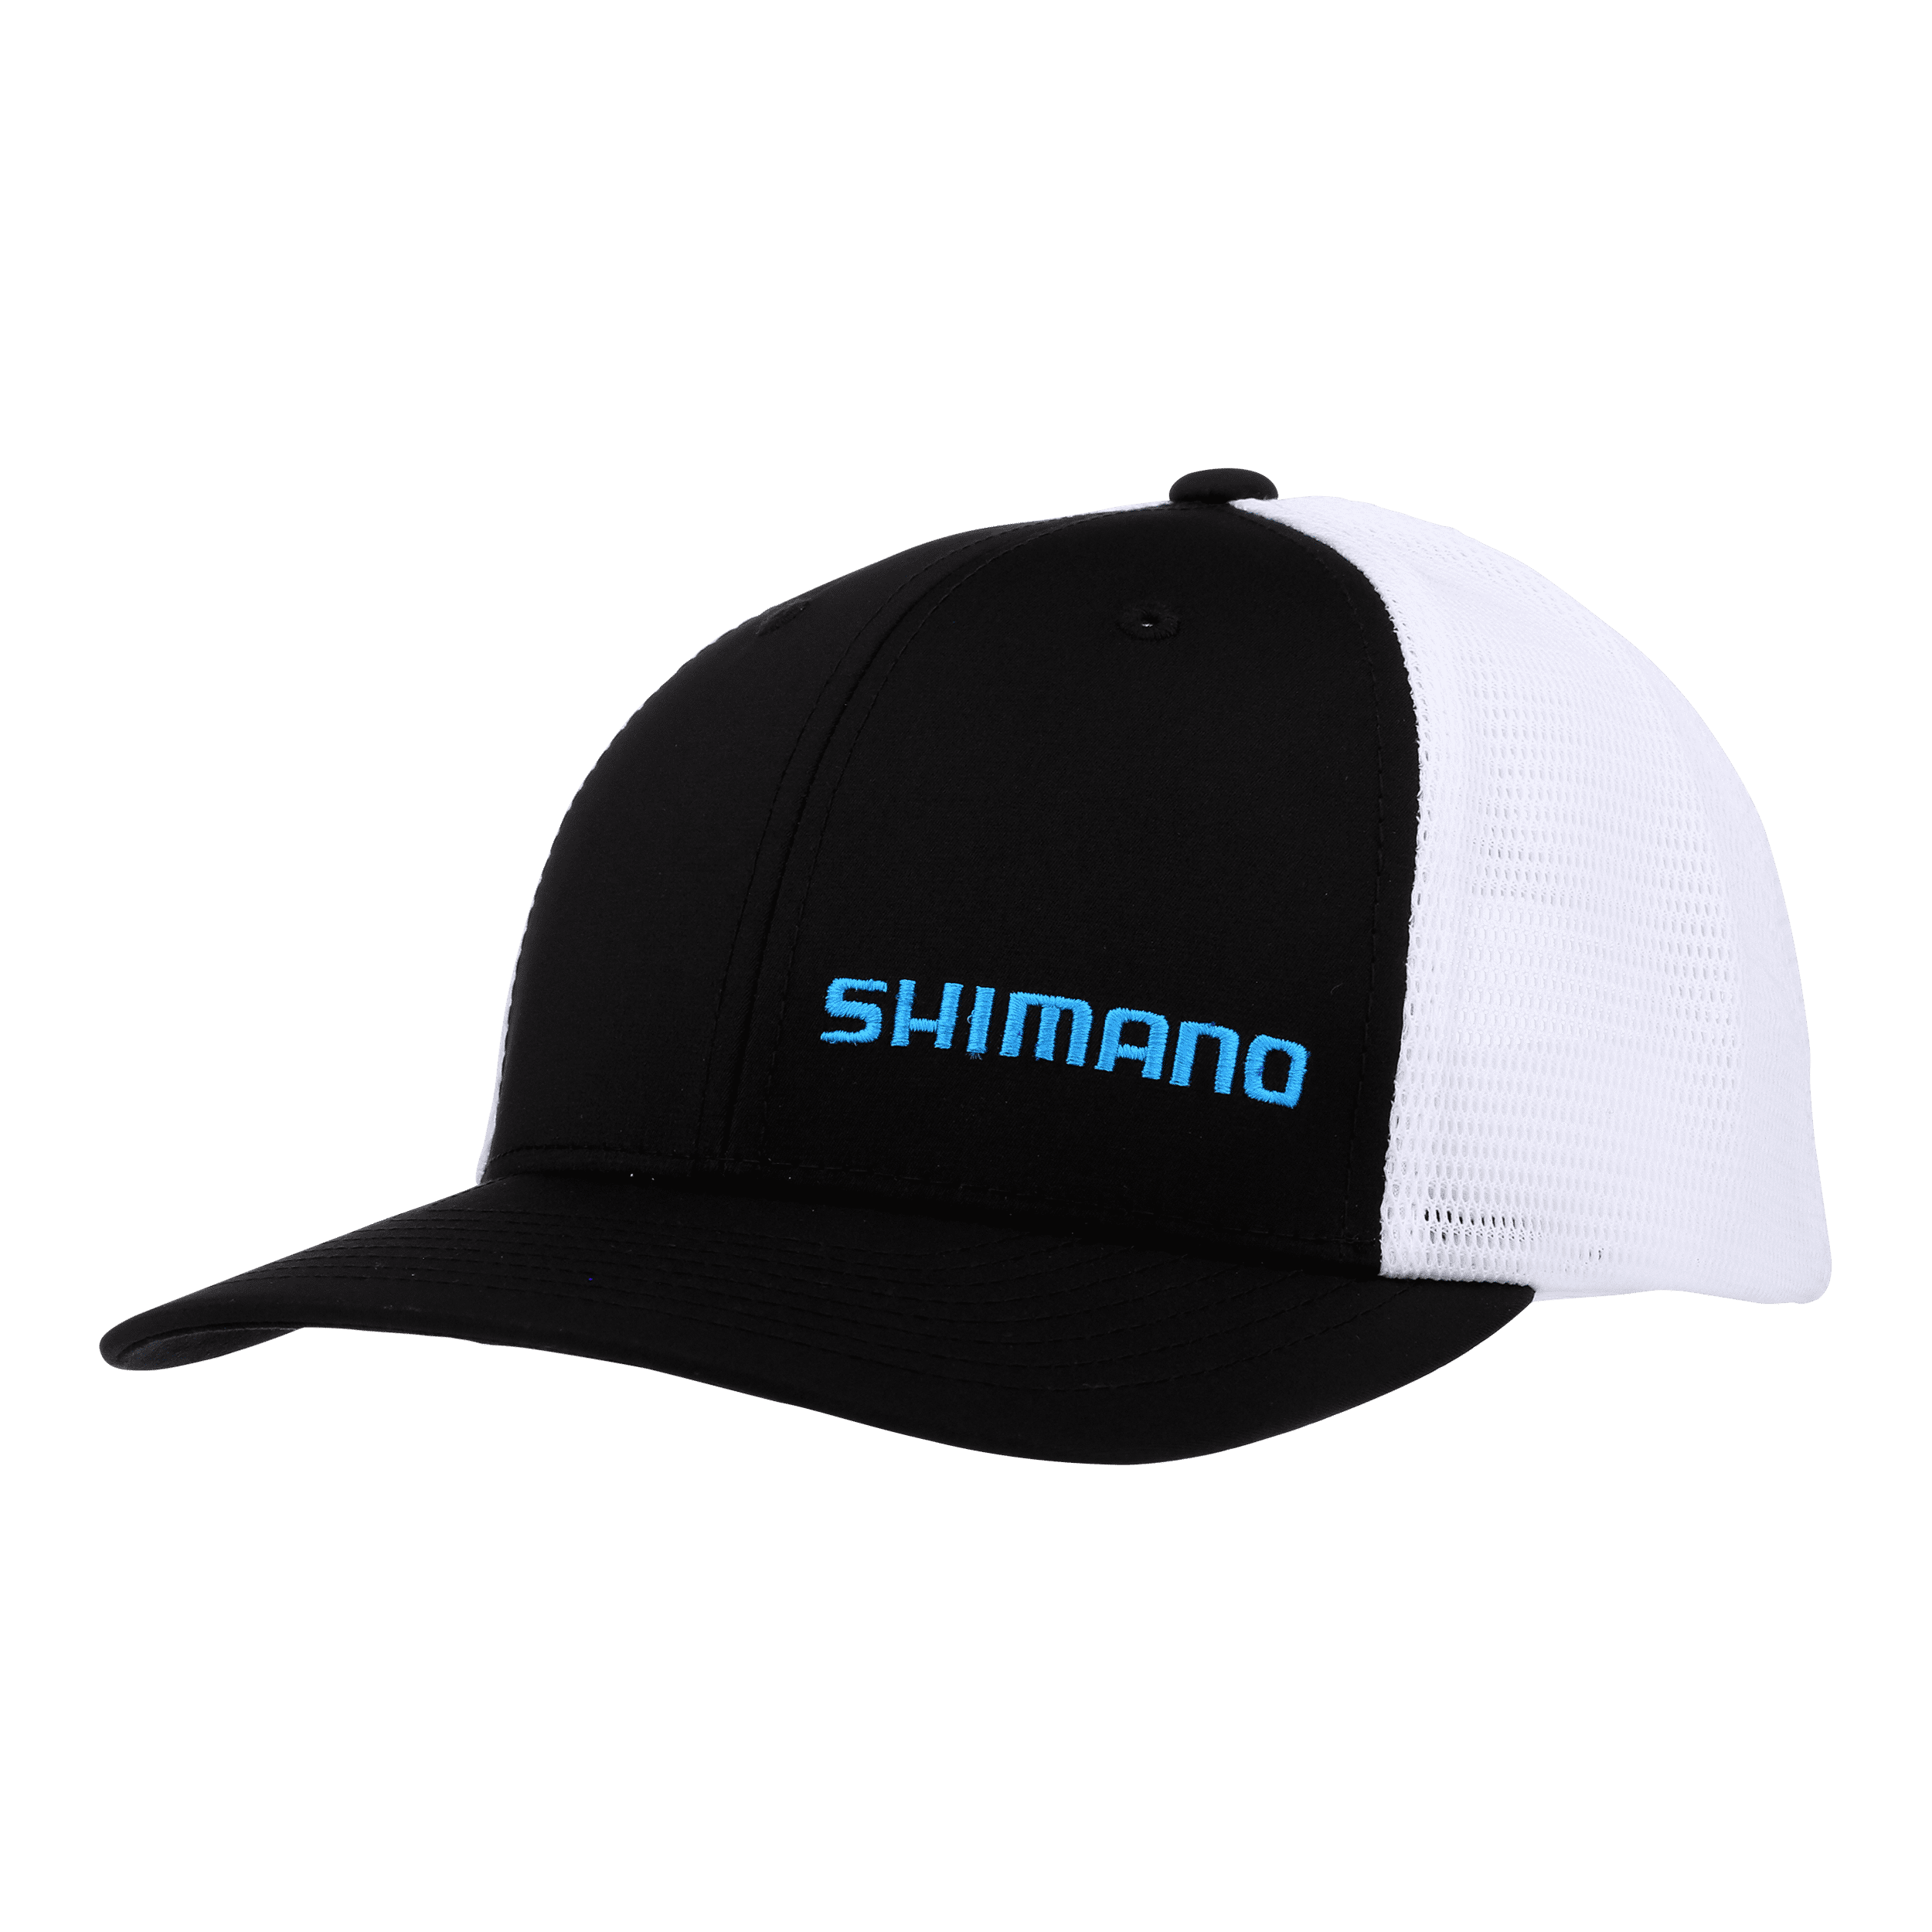 Shimano Fishing Shimano Performance Trucker Hat - Black, One Size Fits Most  [AHATPERFTRKBK]